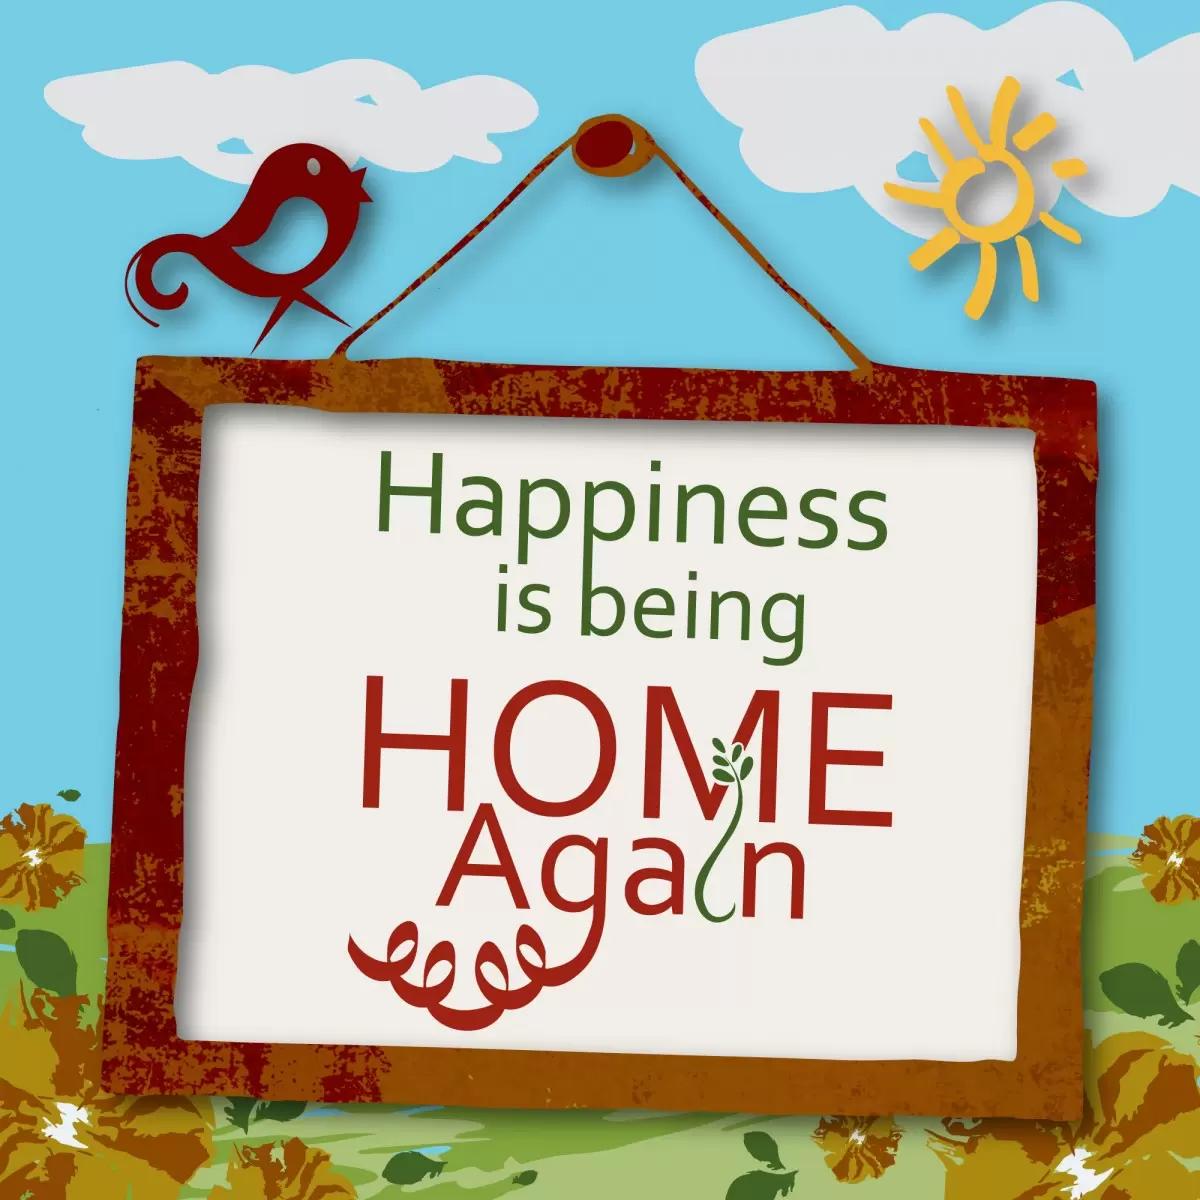 Happiness Being Home - מסגרת עיצובים - מדבקות קיר משפטי השראה טיפוגרפיה דקורטיבית  - מק''ט: 240726